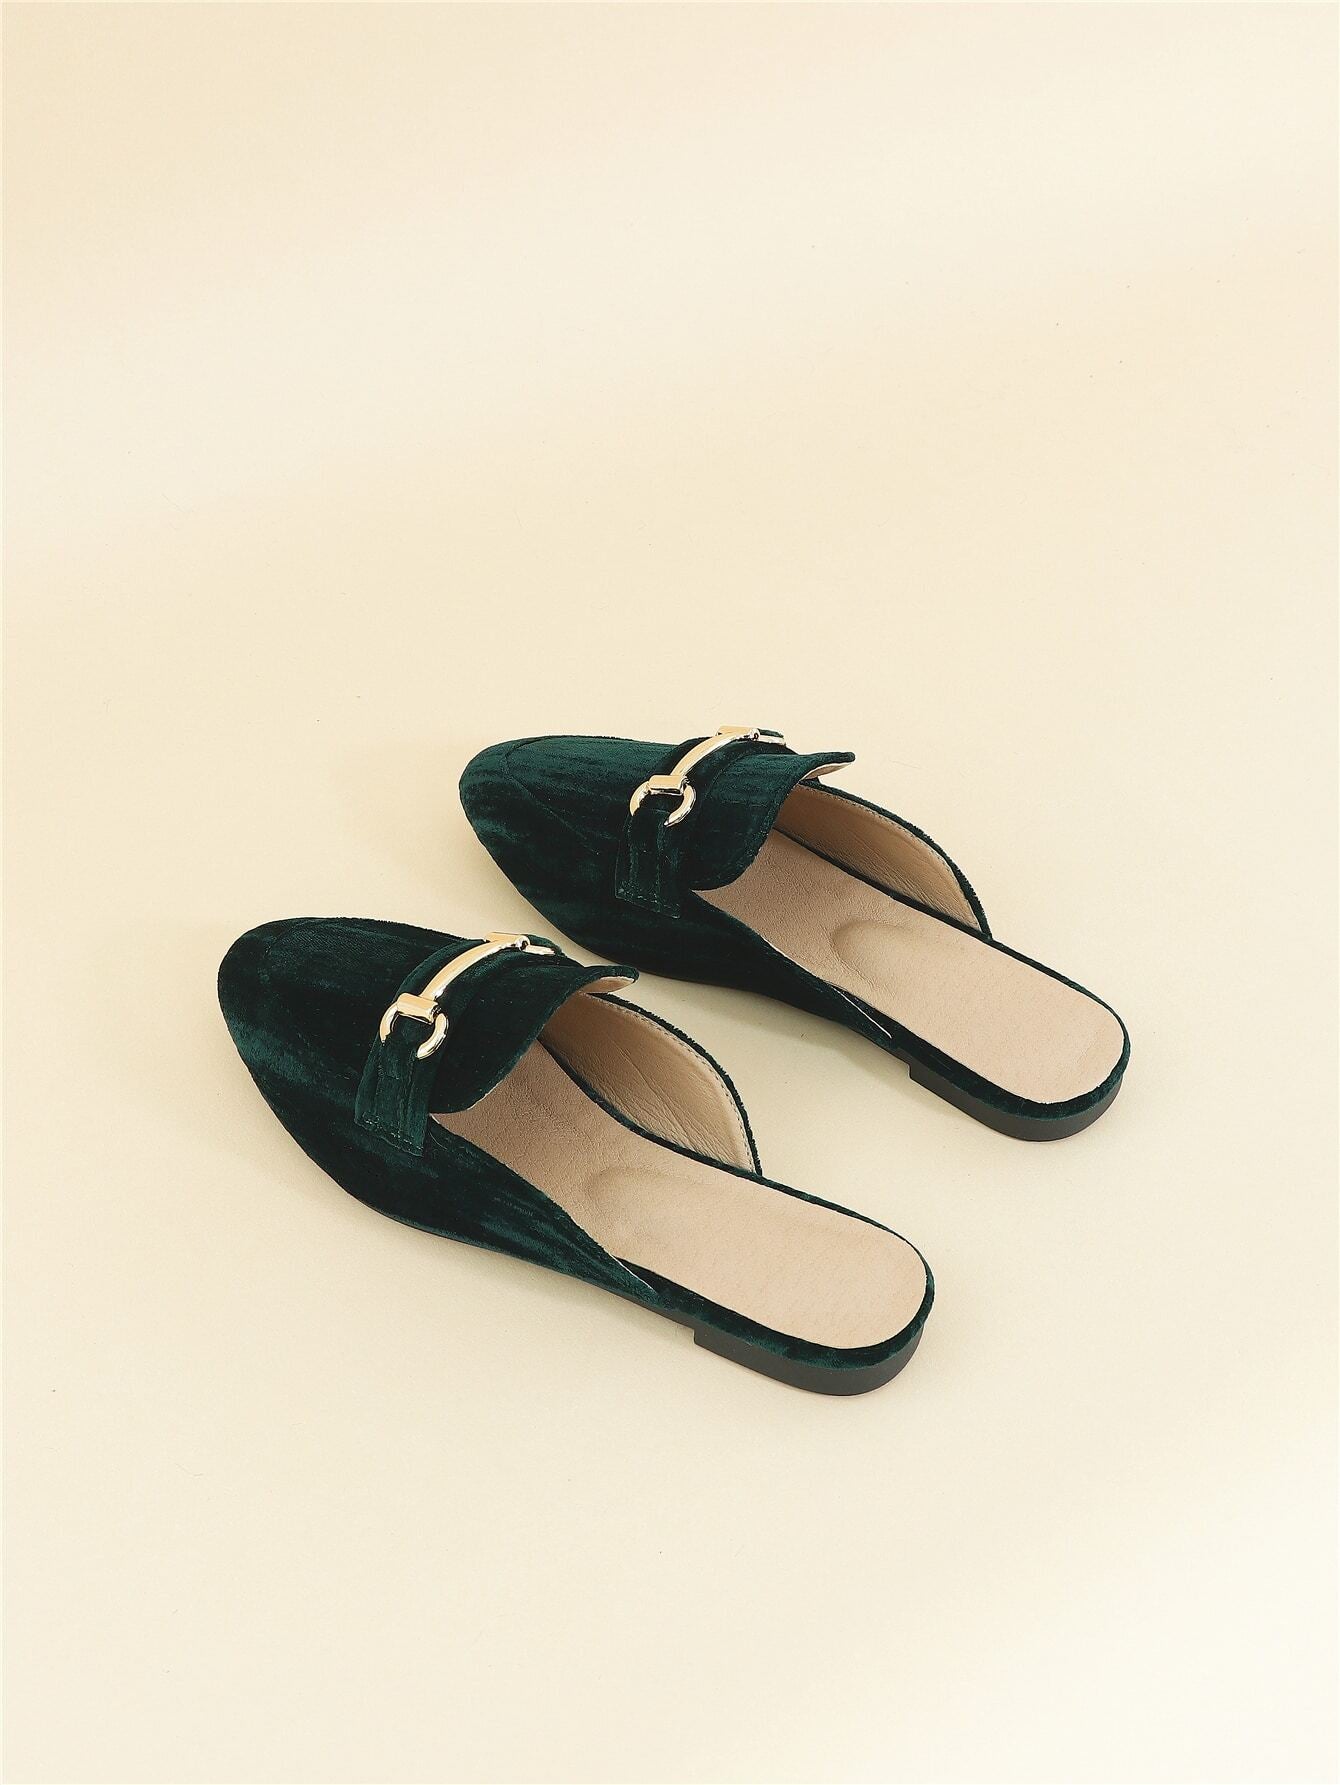 Horsebit Decor Loafer Mules Black Flat Shoes For Women